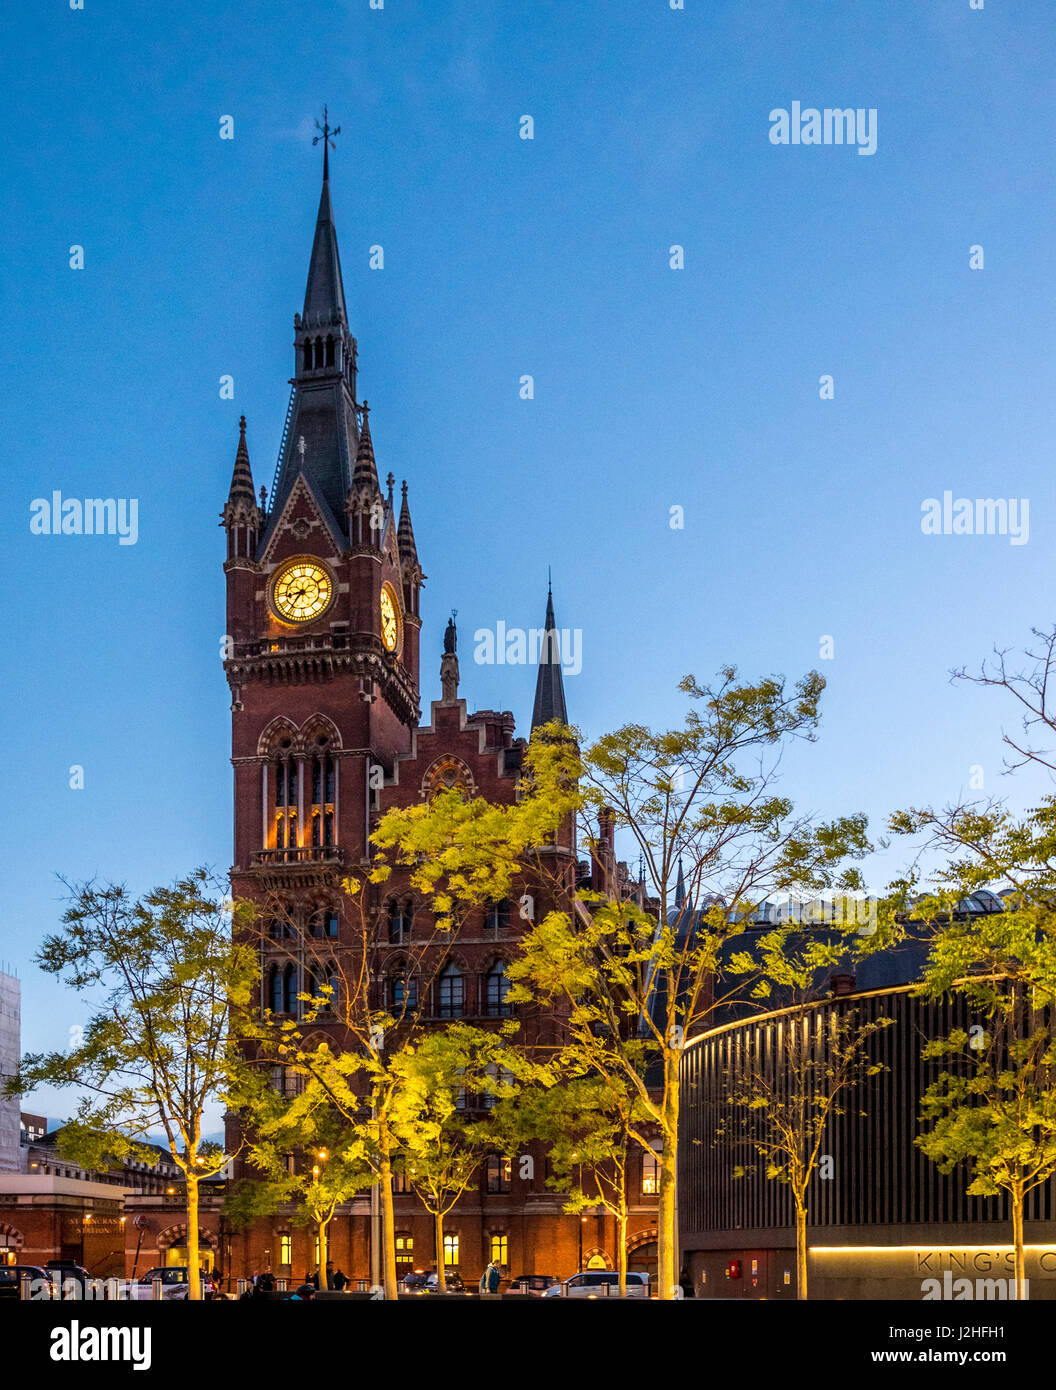 St Pancras train station clocktower at dusk, London, UK. Stock Photo